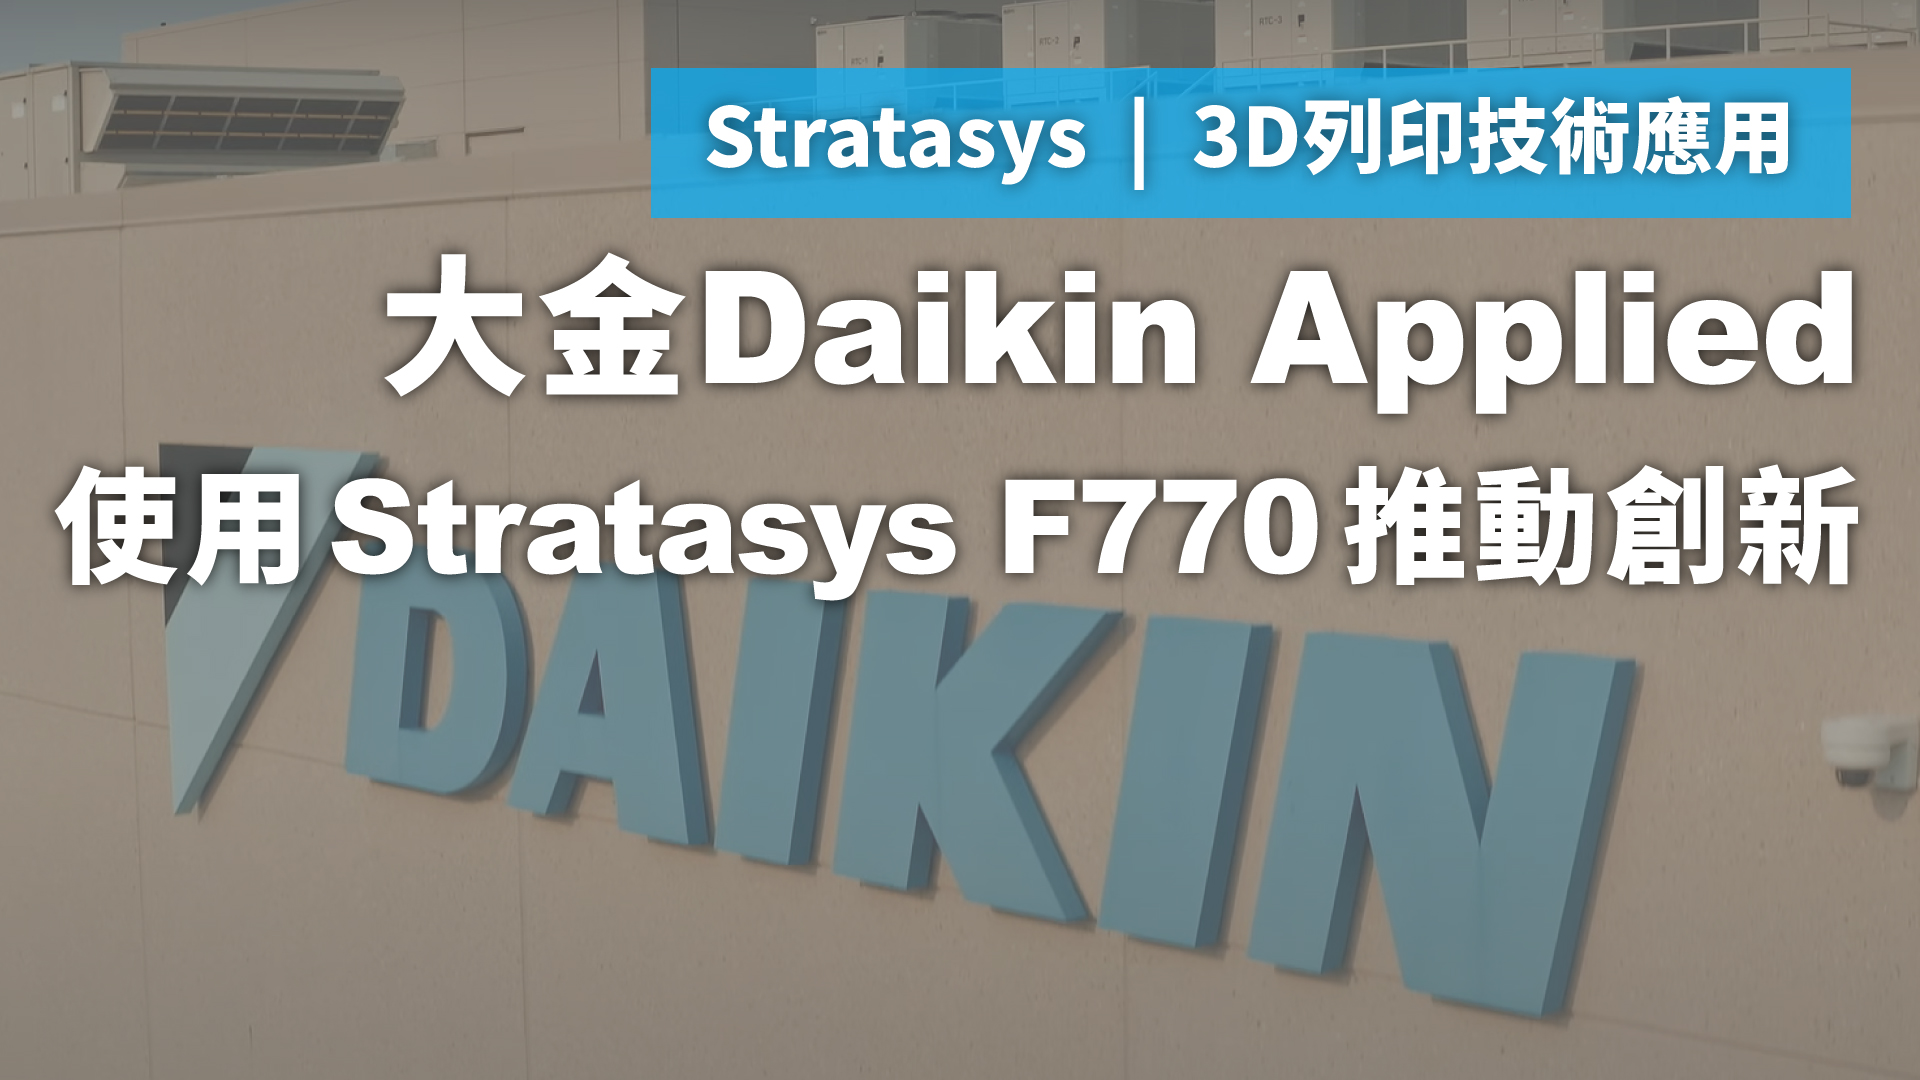 大金Daikin Applied 使用 Stratasys F770 推動創新